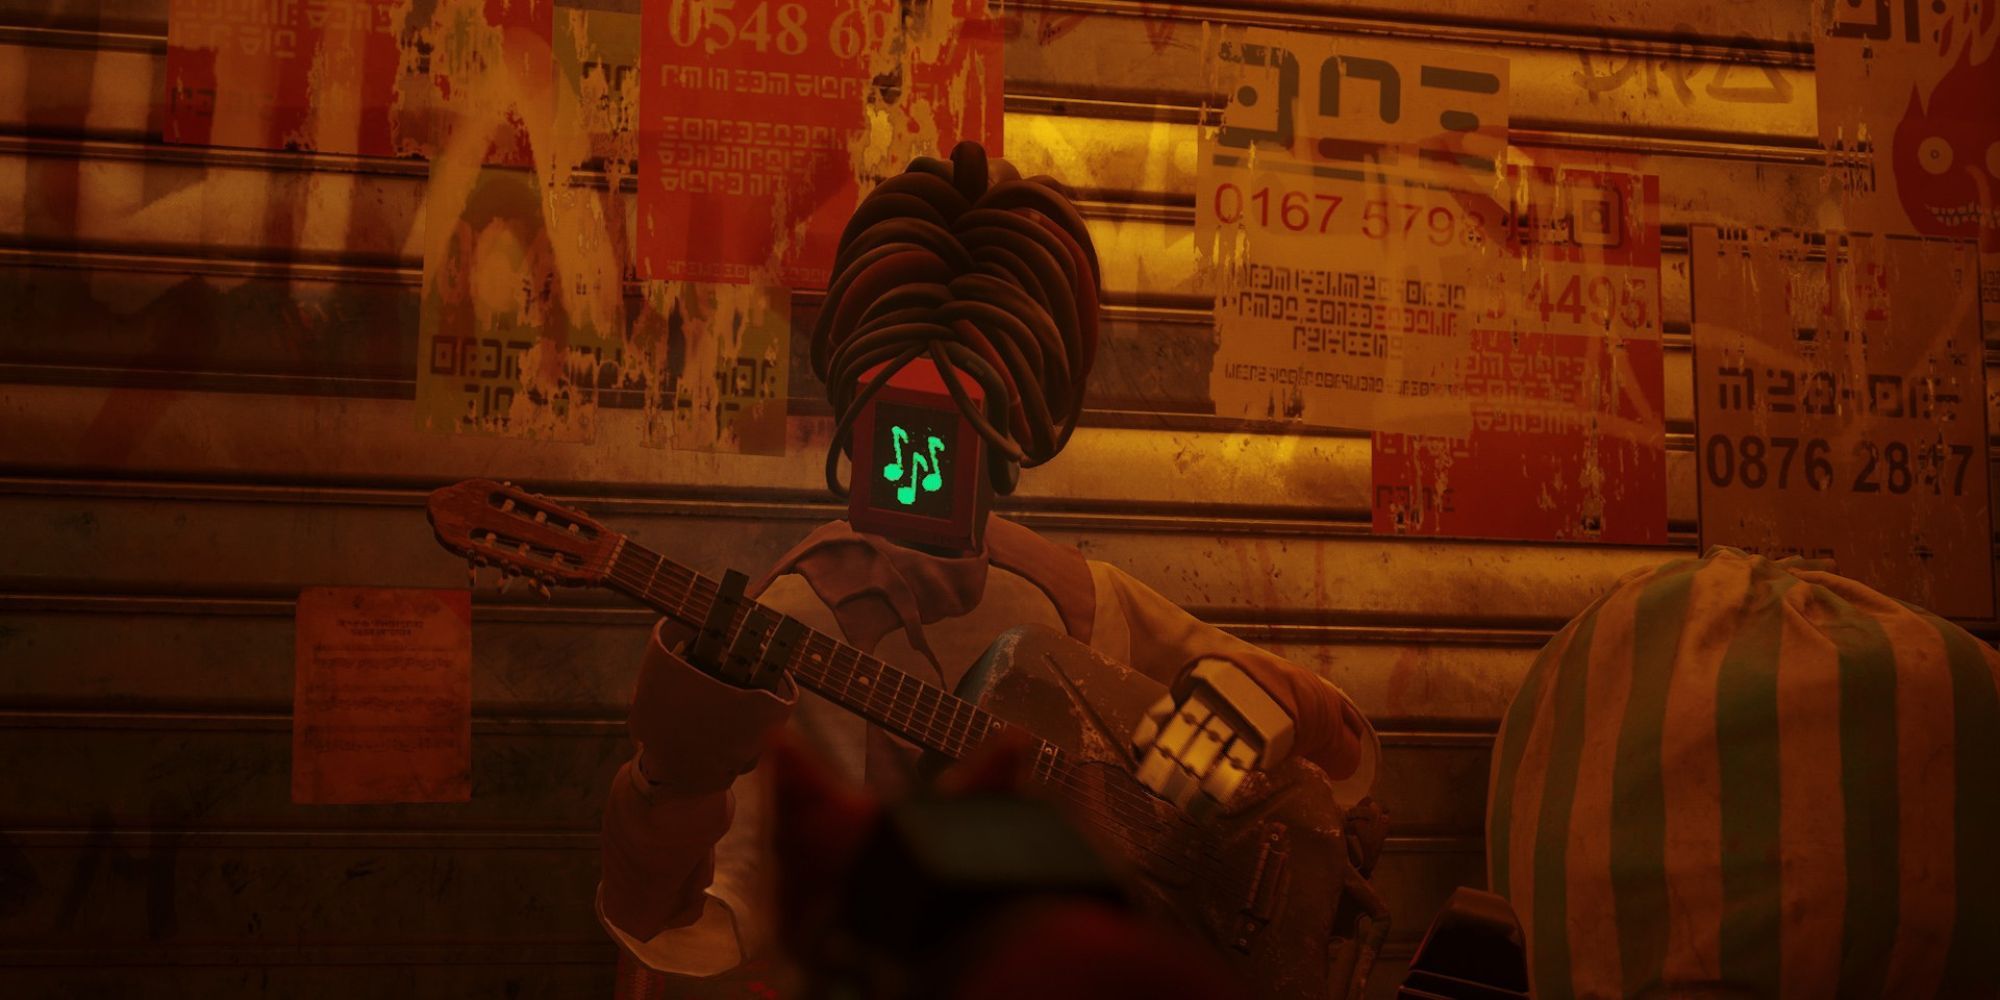 Morusque plays on his guitar in the slums